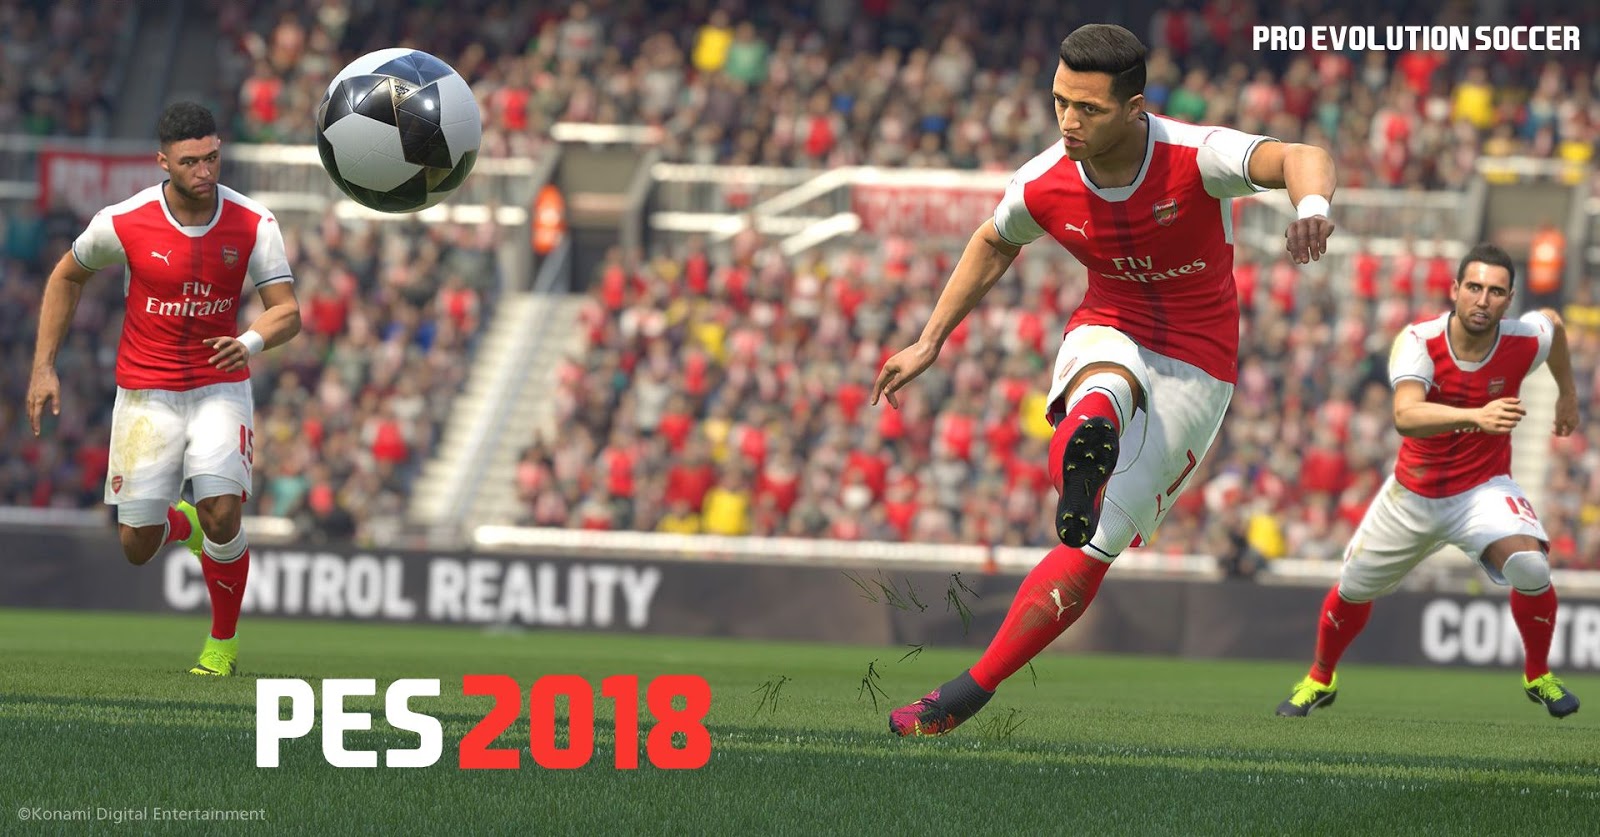 Pro Evolution Soccer 2018 Pc Game